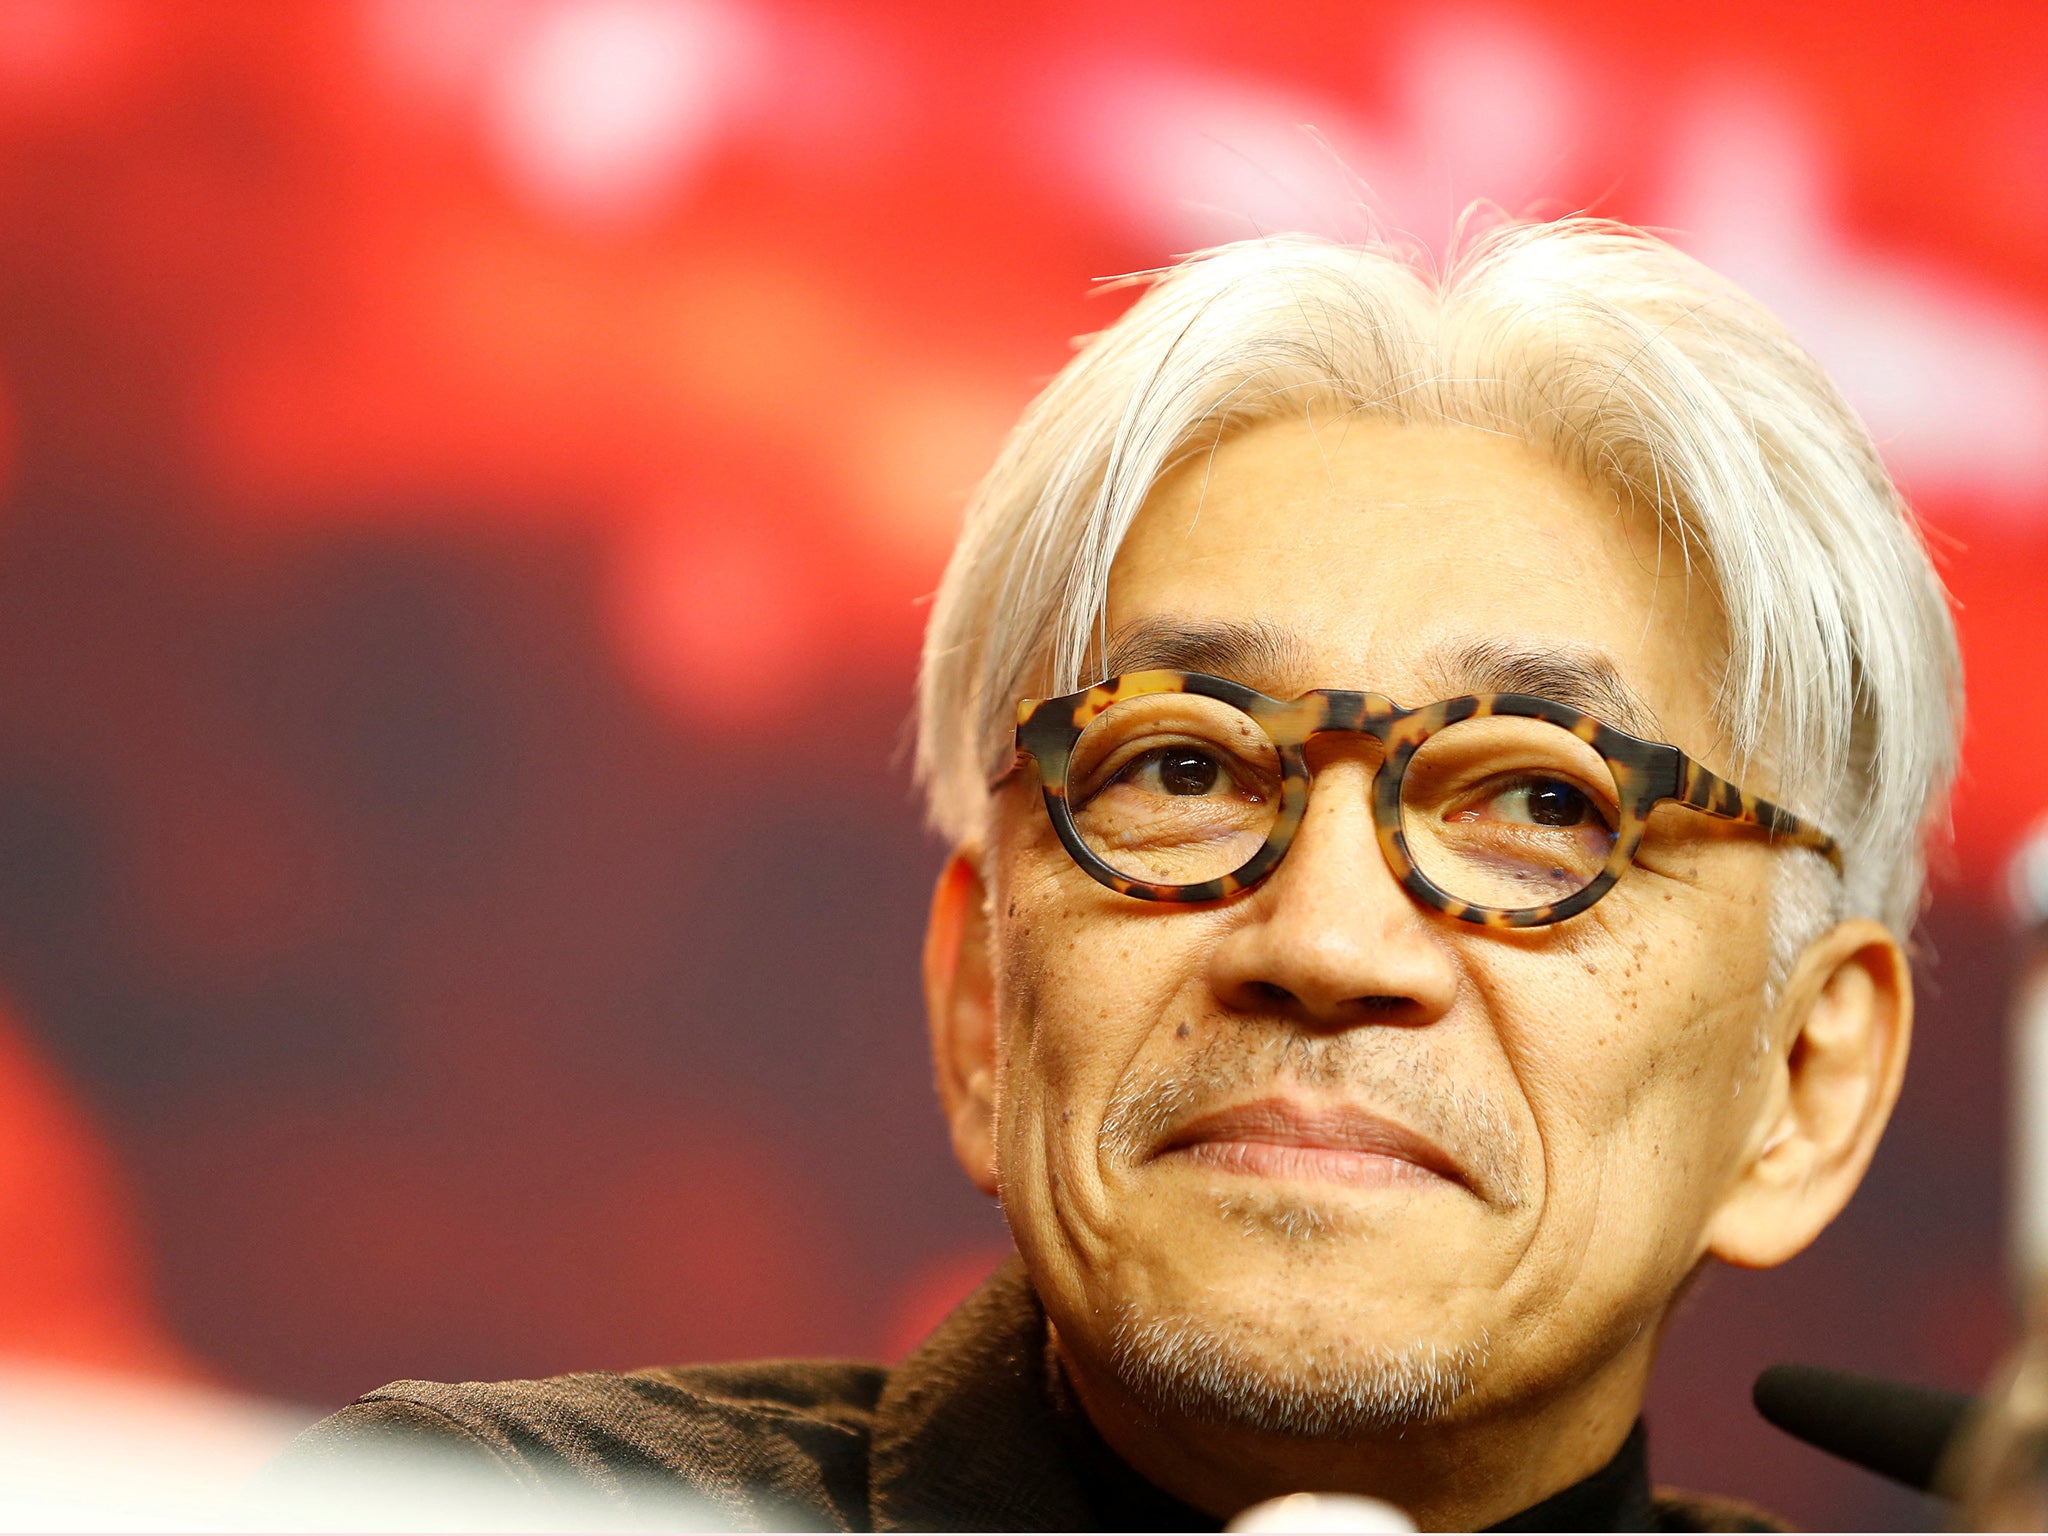 Ryuichi Sakamoto won awards for his innovative film scores